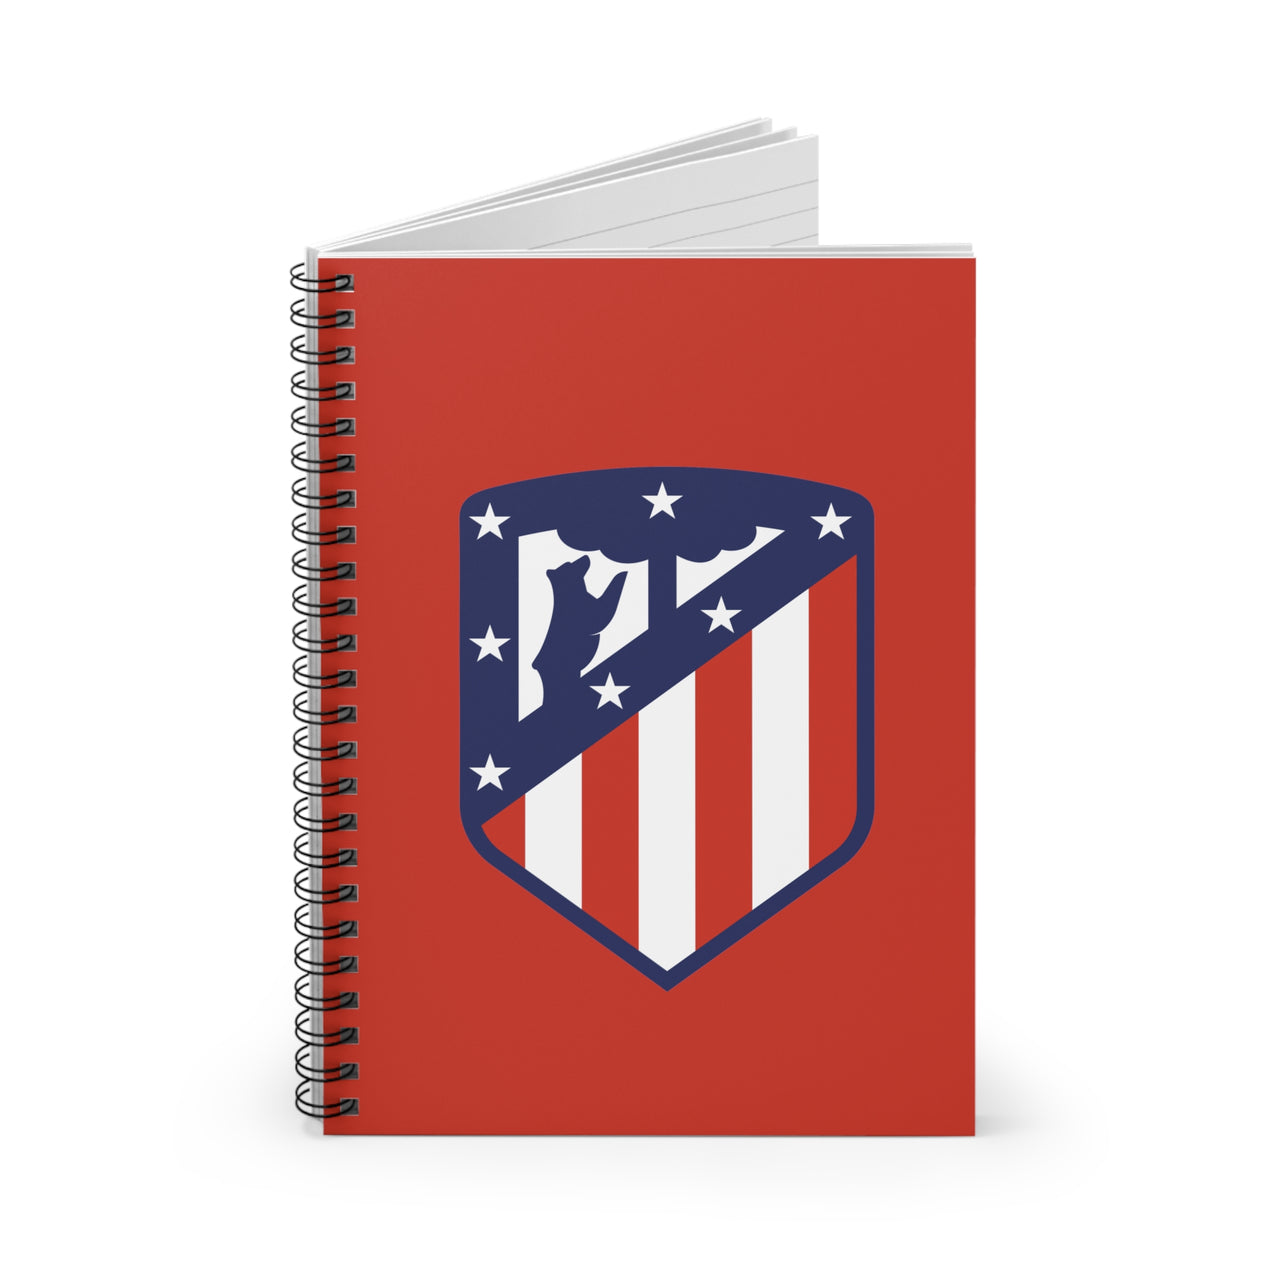 Atletico Madrid Spiral Notebook - Ruled Line